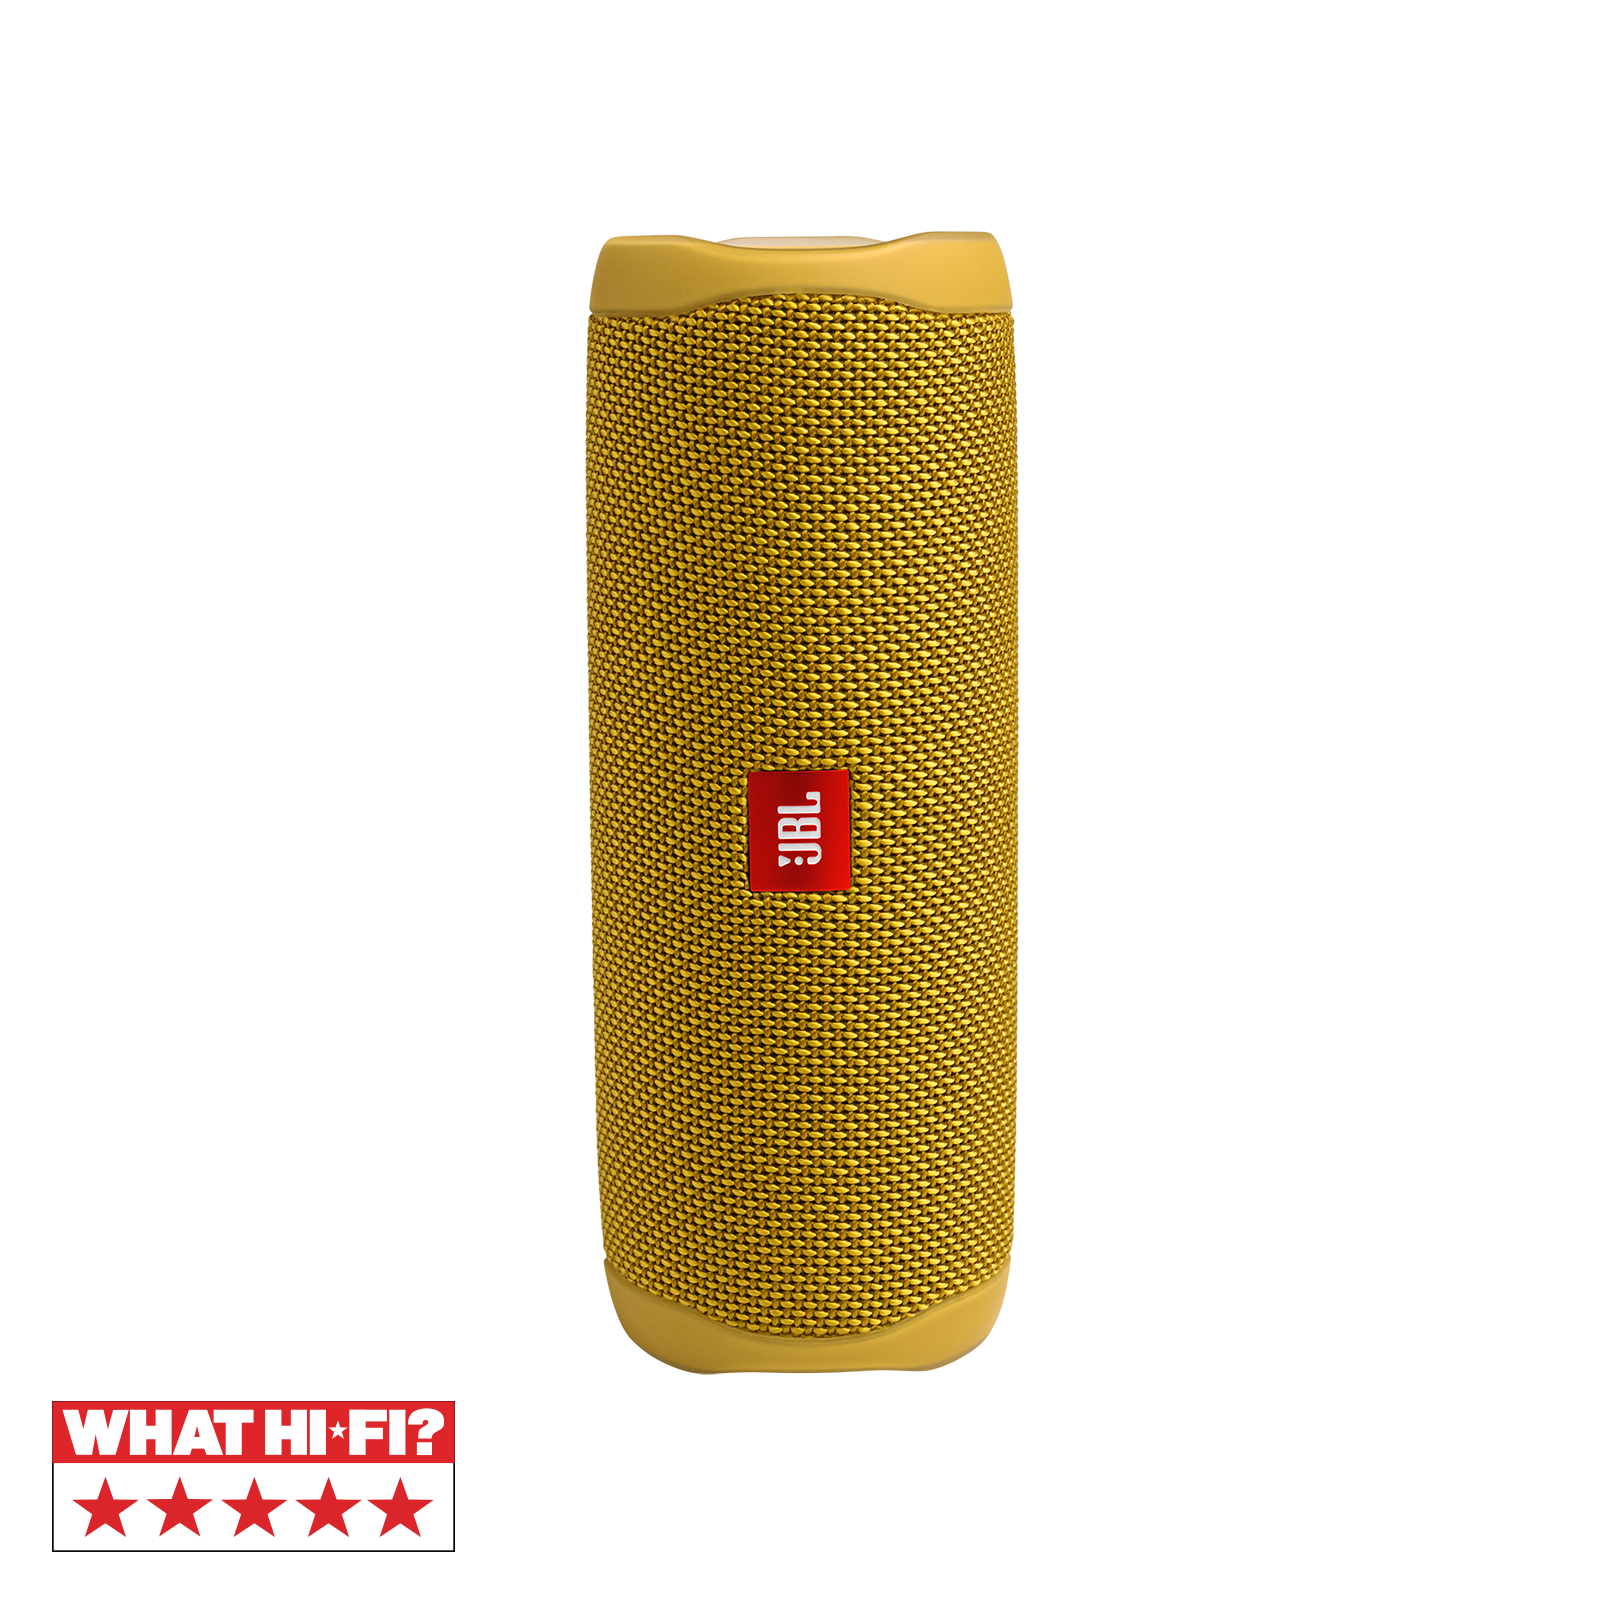 JBL Flip 5 - Mustard Yellow - Portable Waterproof Speaker - Hero